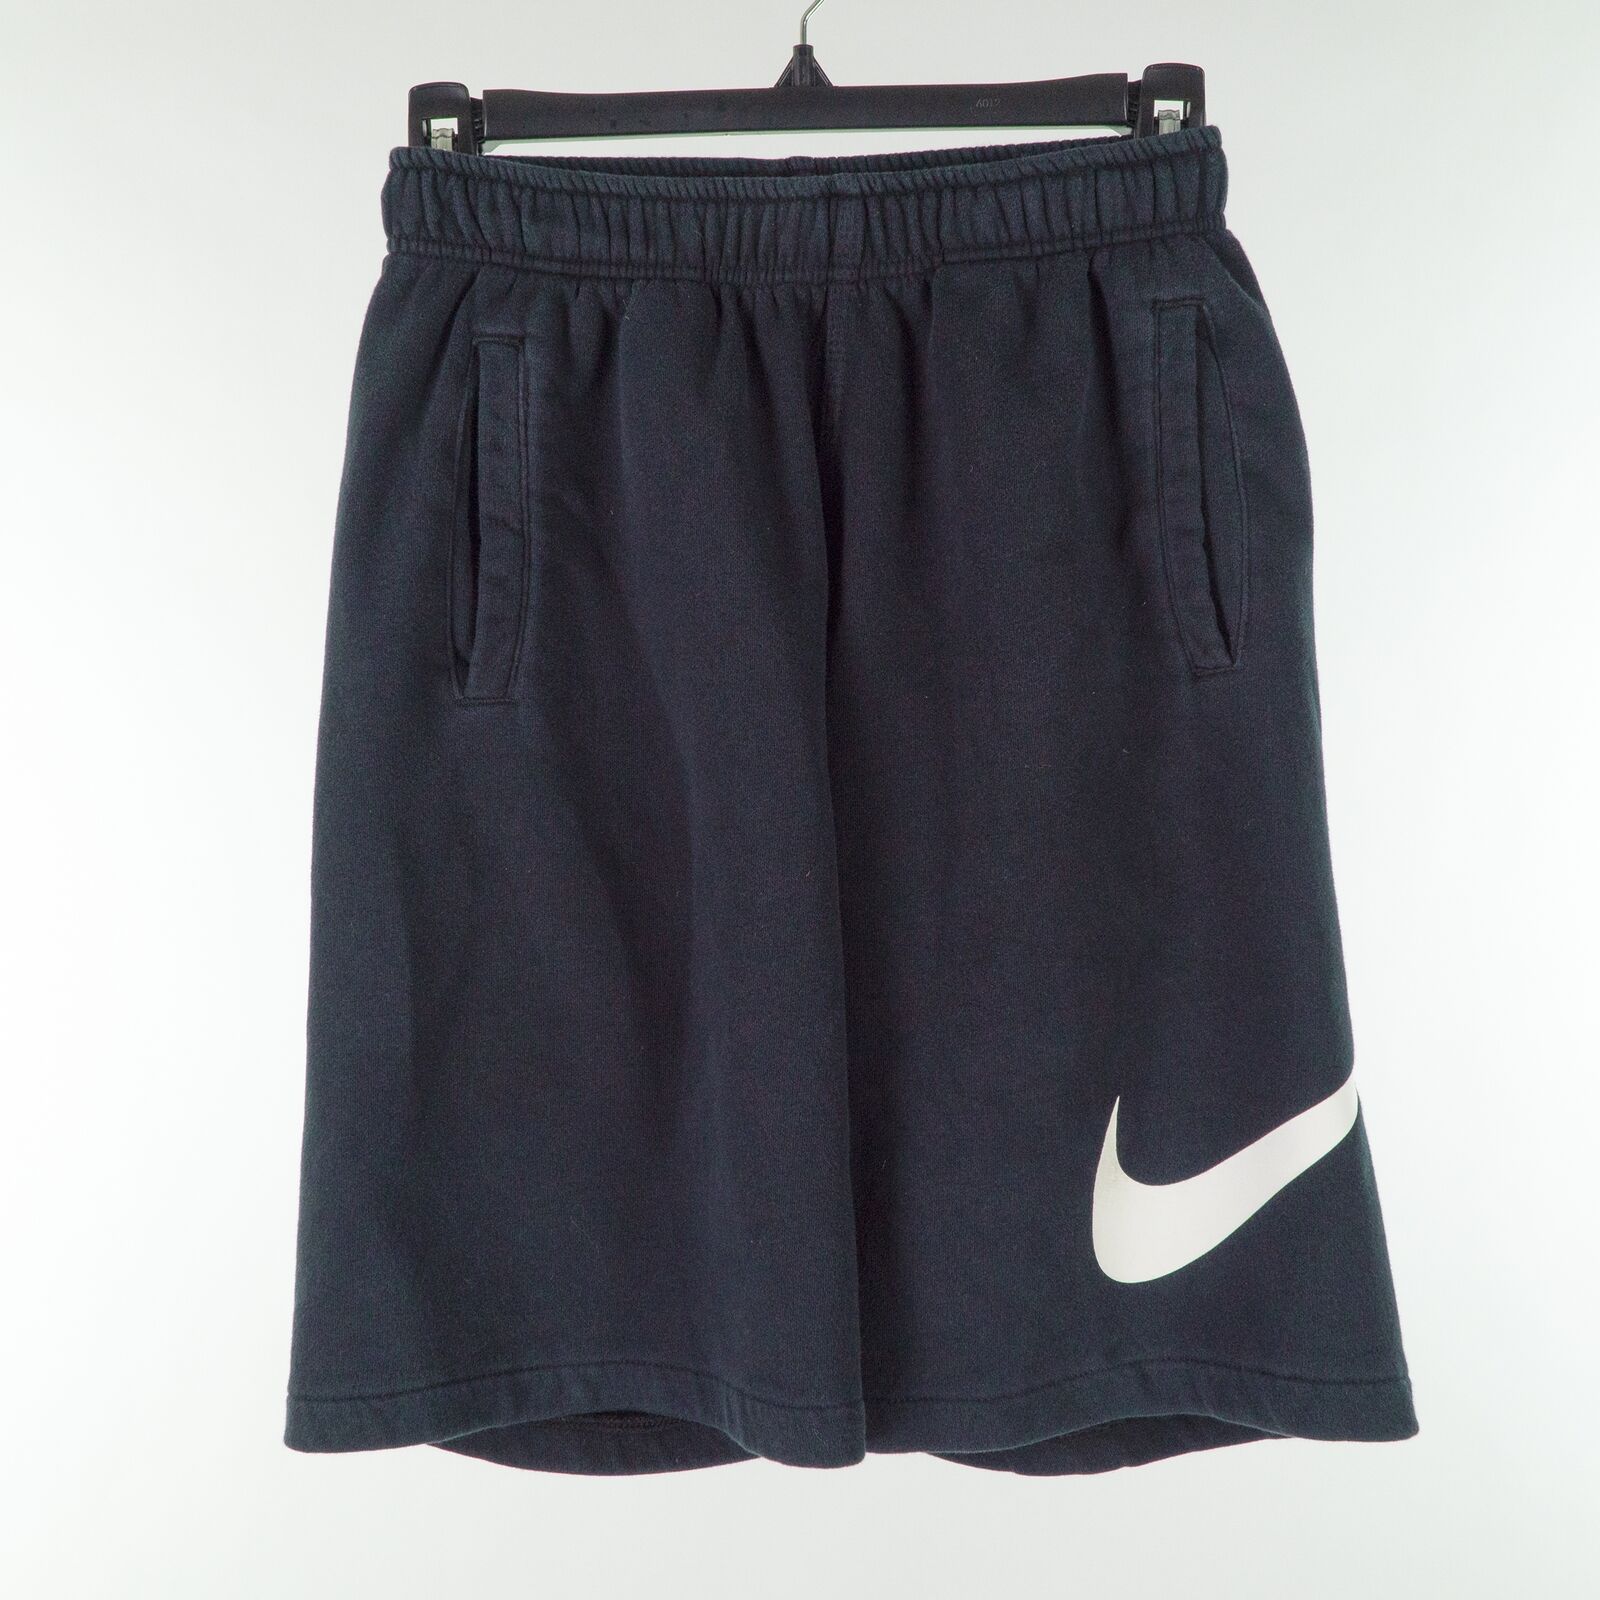 Nike Kids Boys Activewear Medium Black Cotton Athletic Shorts